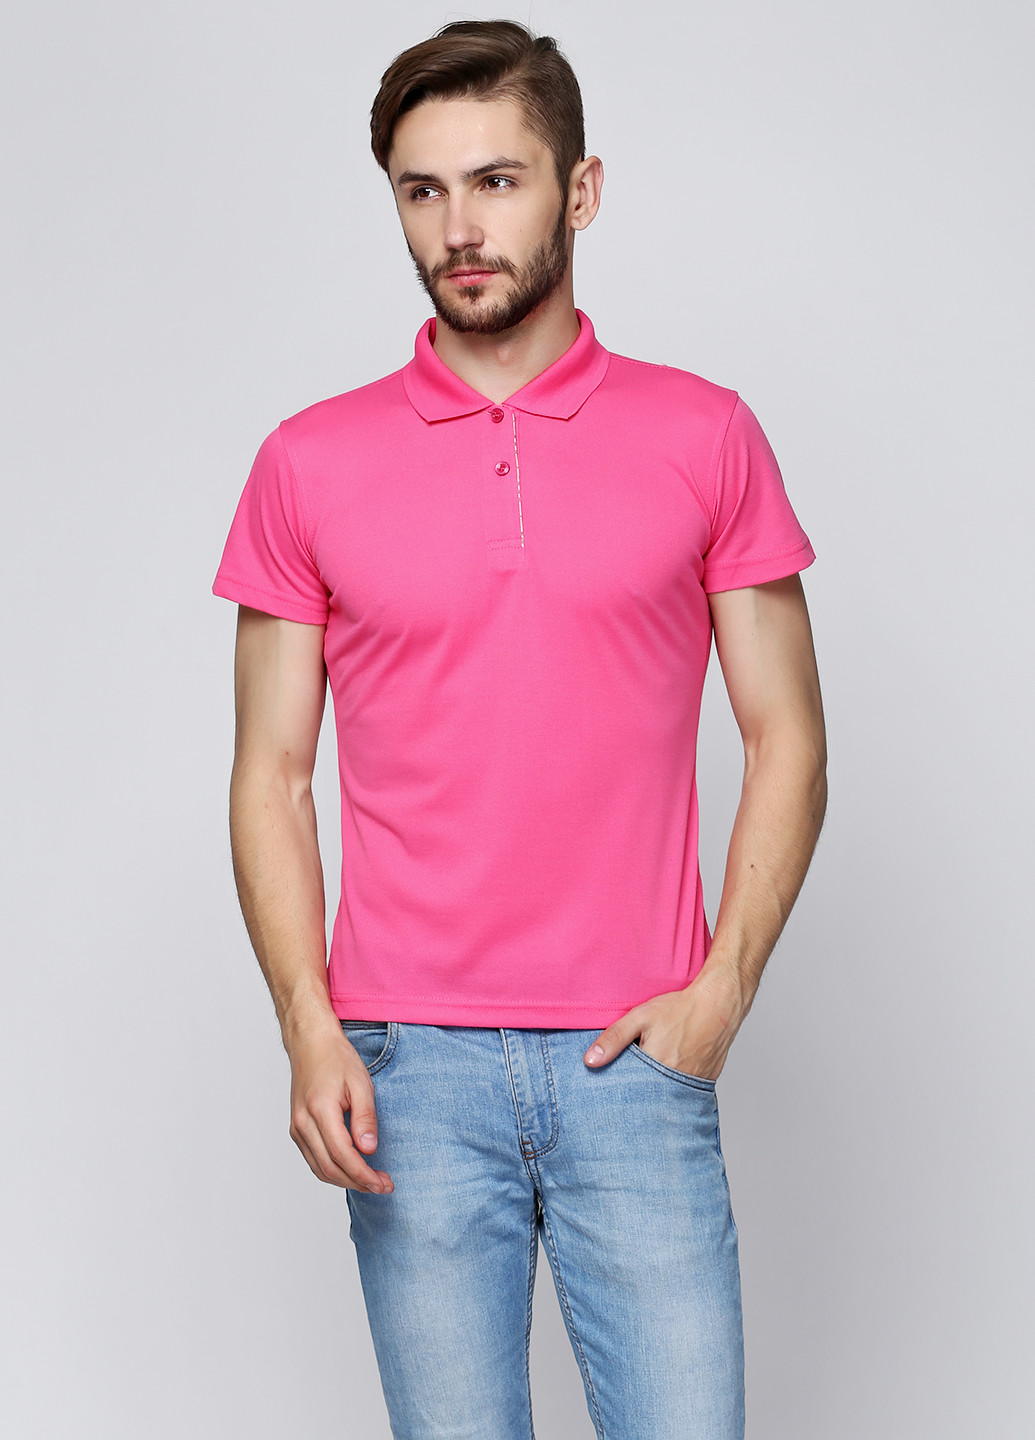 Розовая футболка-поло для мужчин SOT однотонная